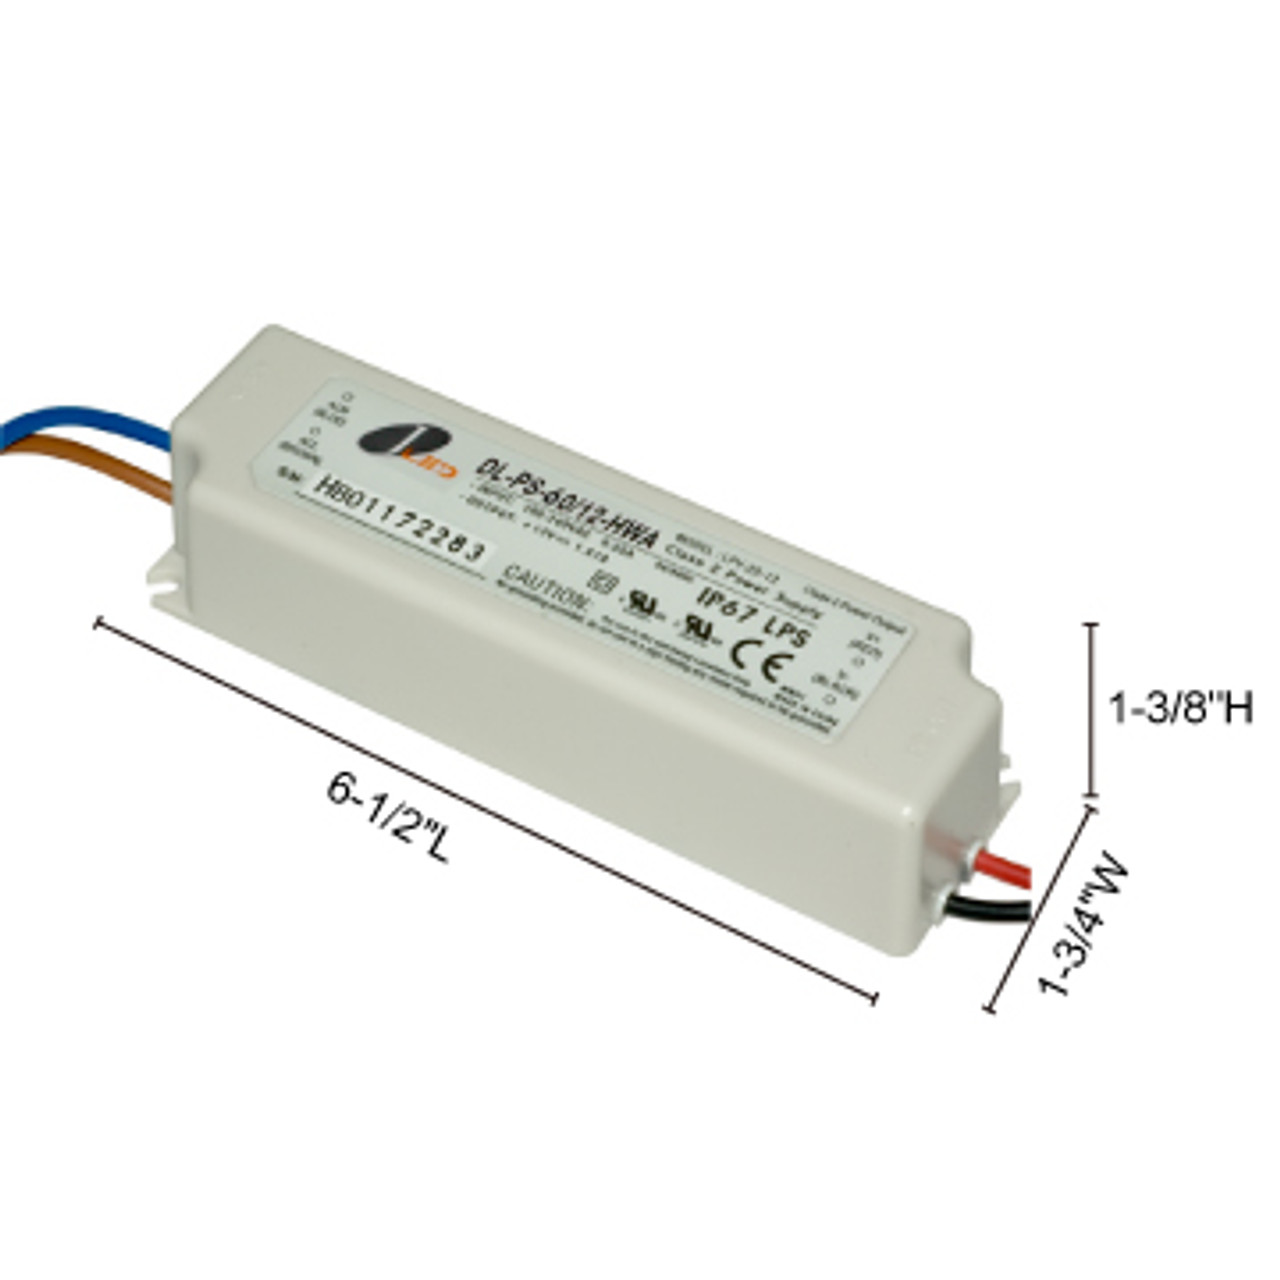 JESCO Lighting DL-PS-60/12-HWA 60W 12V DC Hardwire Power Supply., White